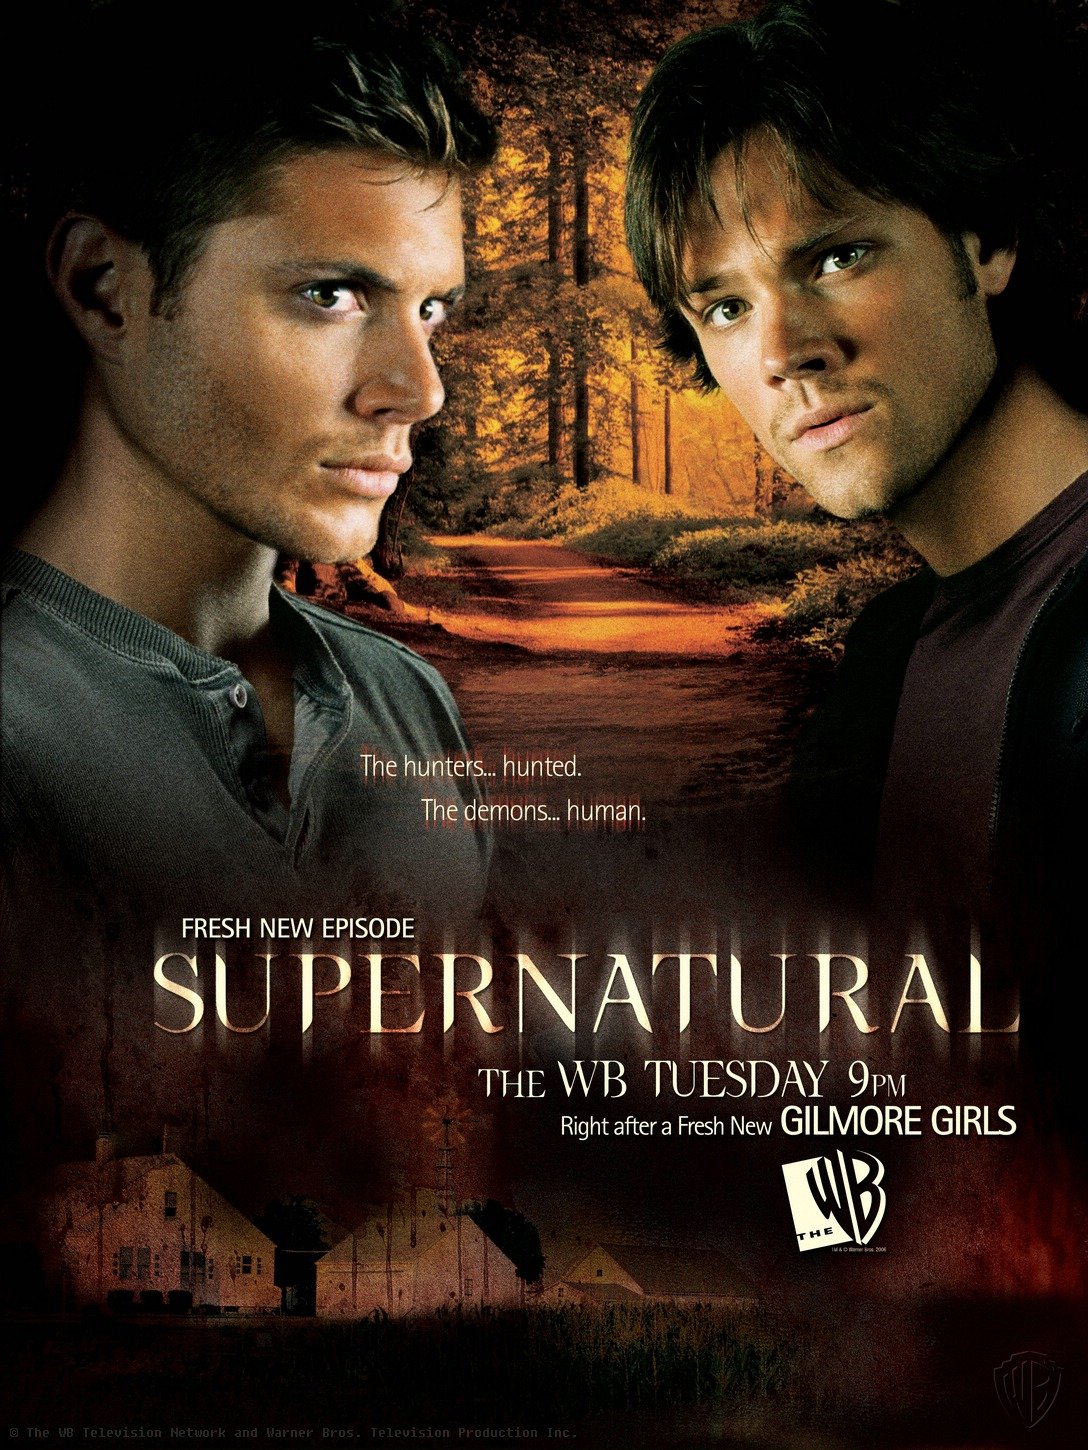 Poster Of Supernatural 2020 Wallpapers